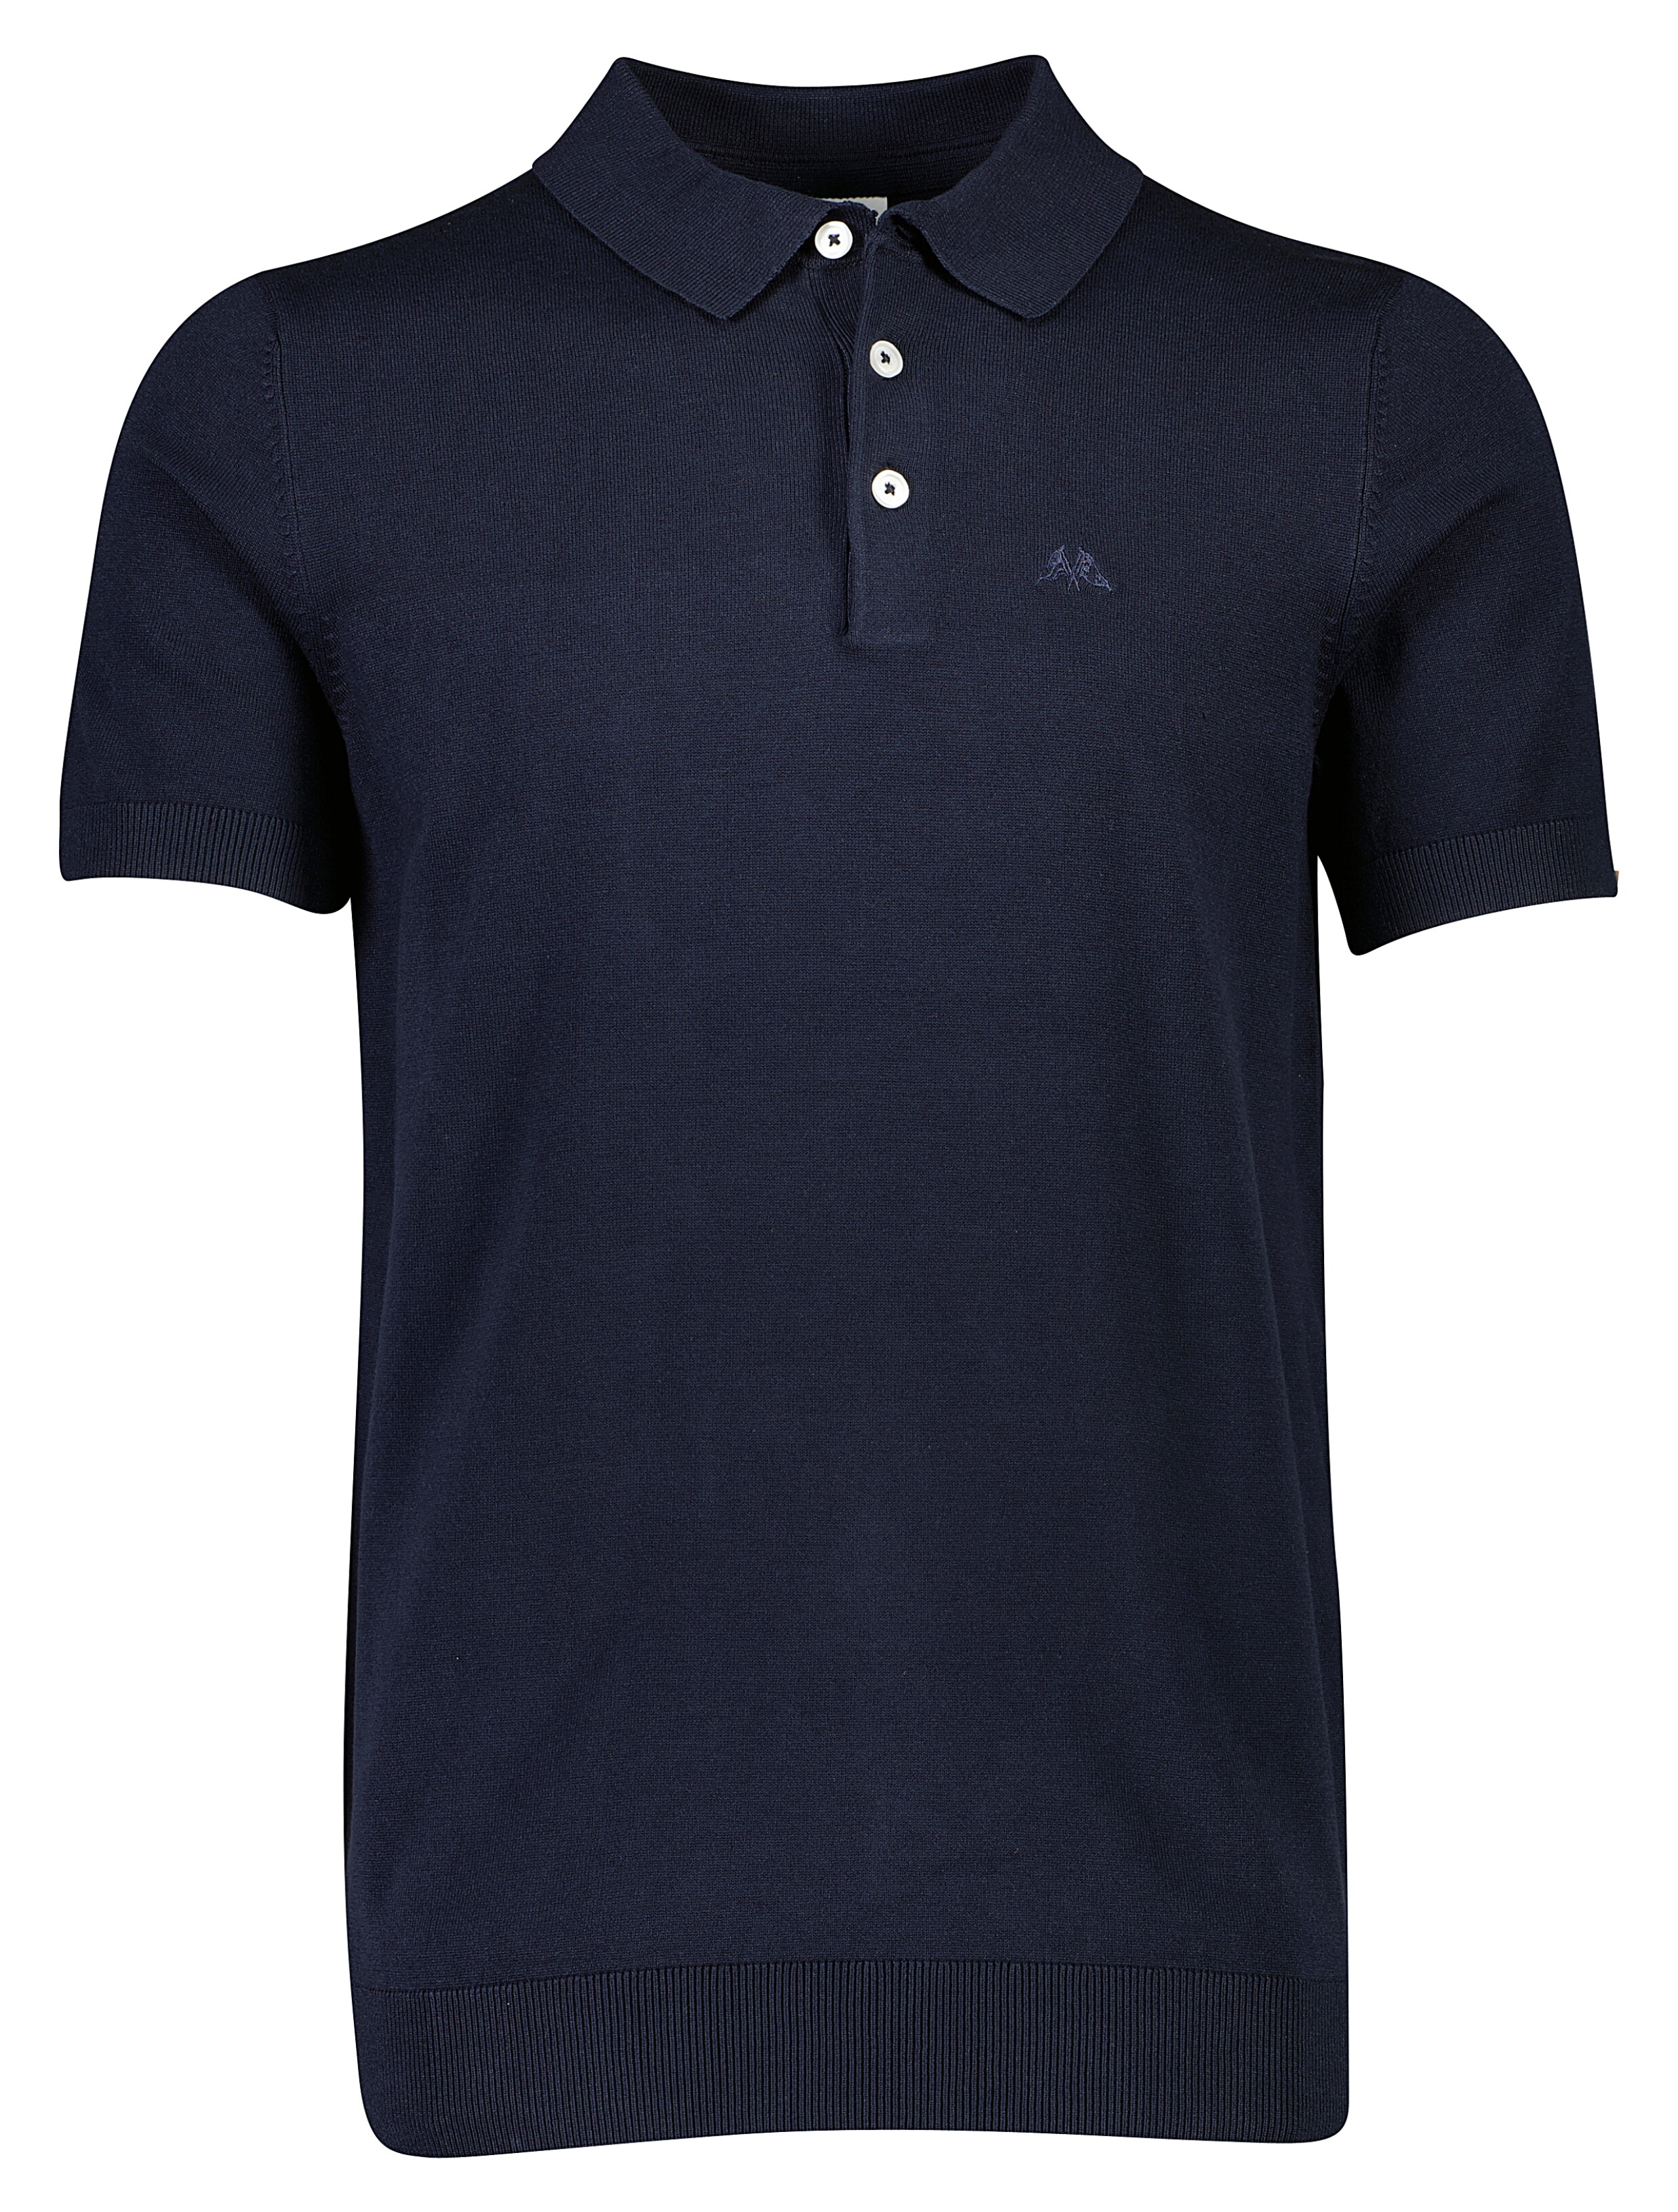 Lindbergh Polo shirt blue / navy